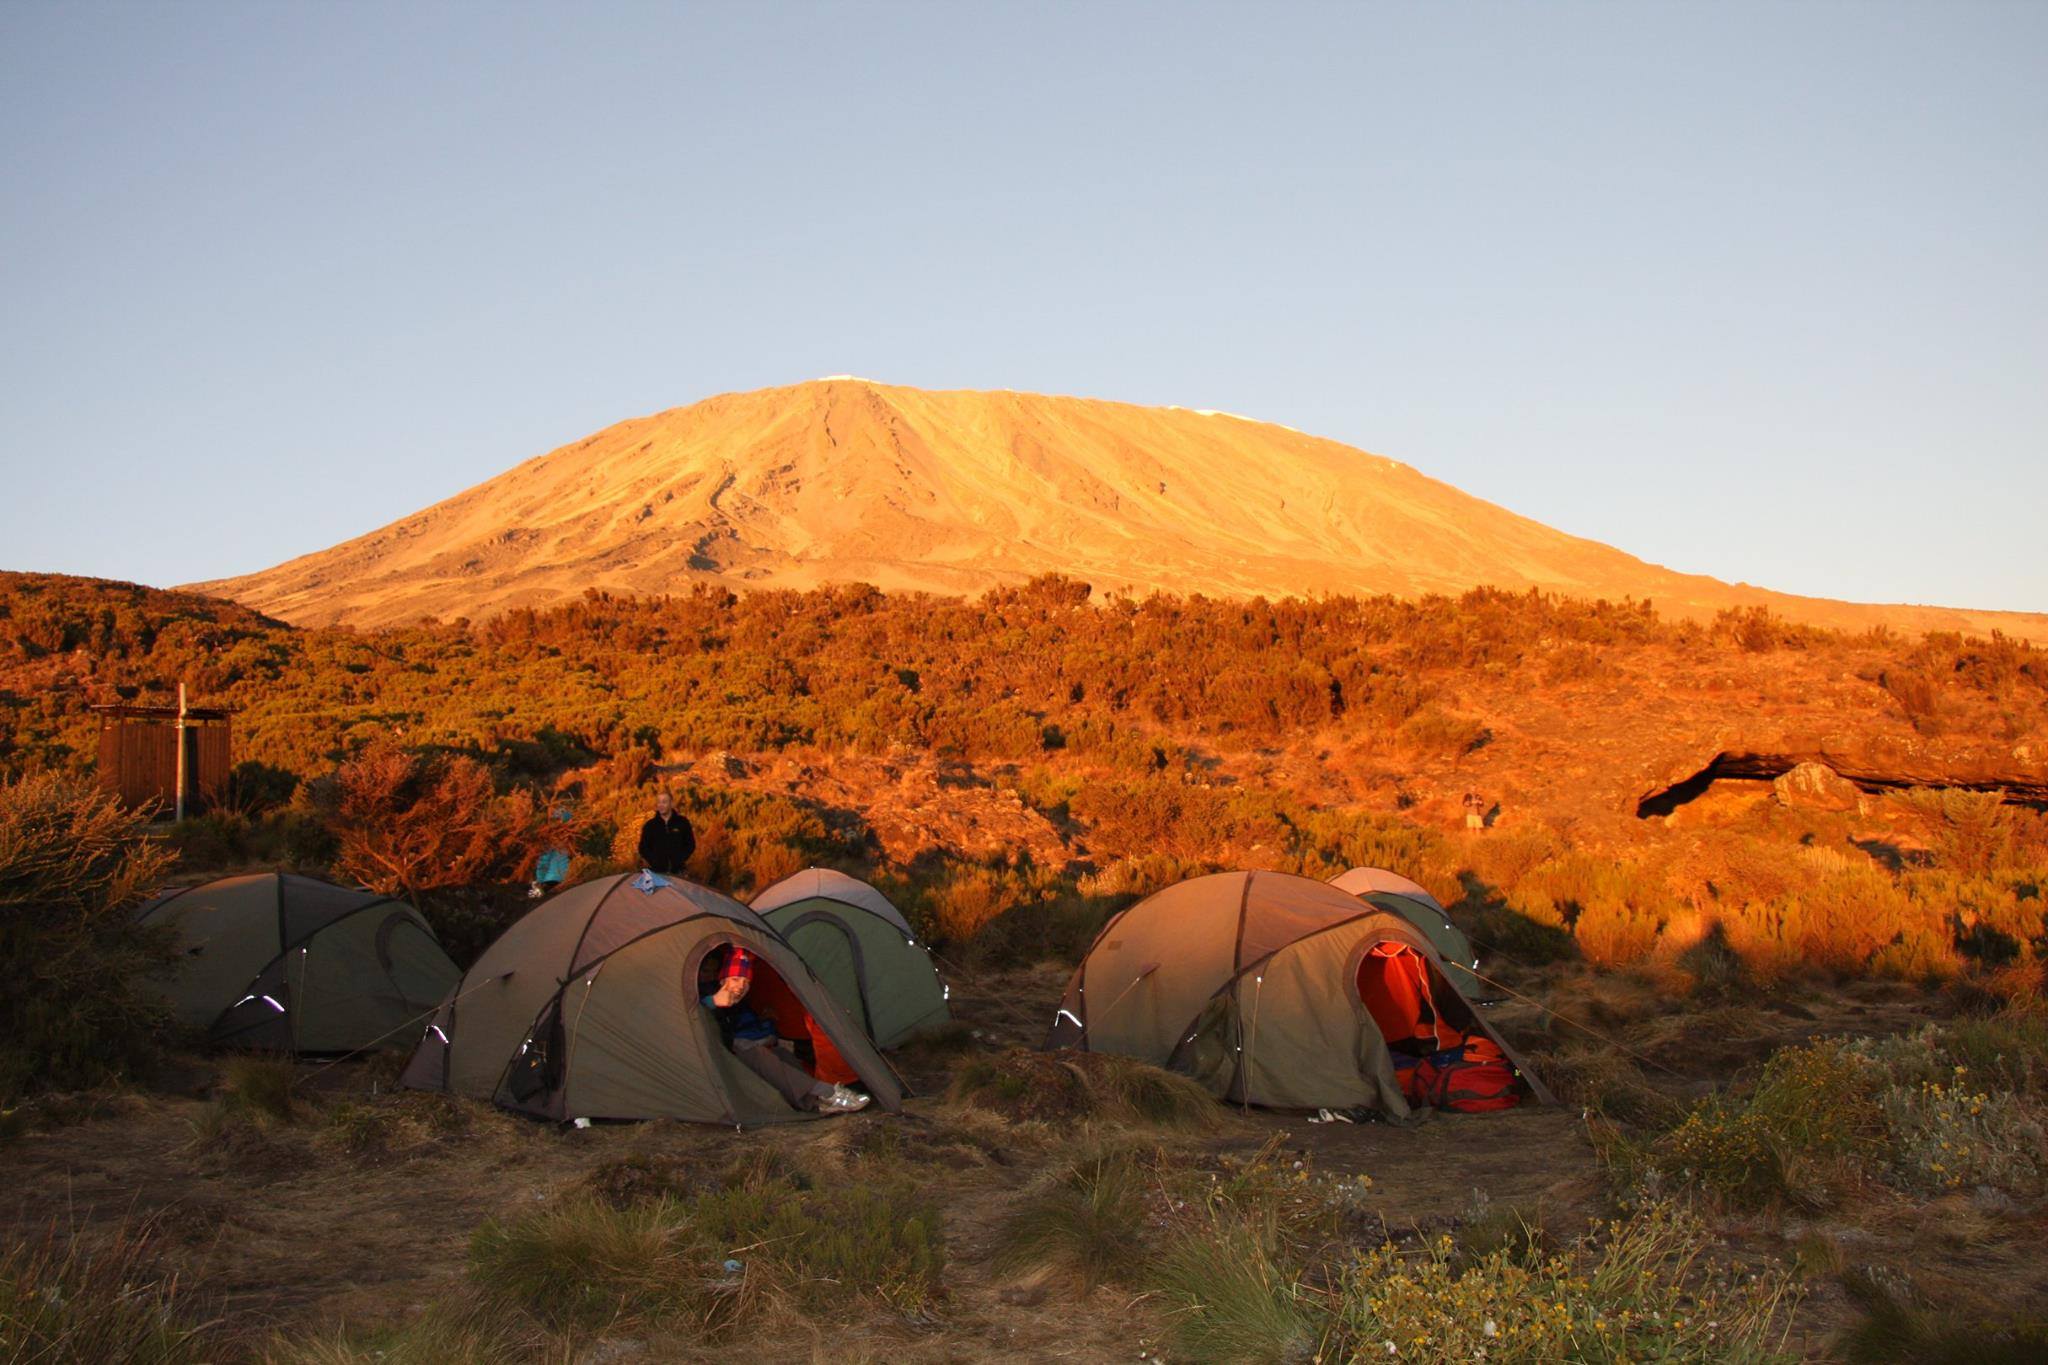 Photo by: - https://kilimanjarobound.com/climbing-mount-kilimanjaro/